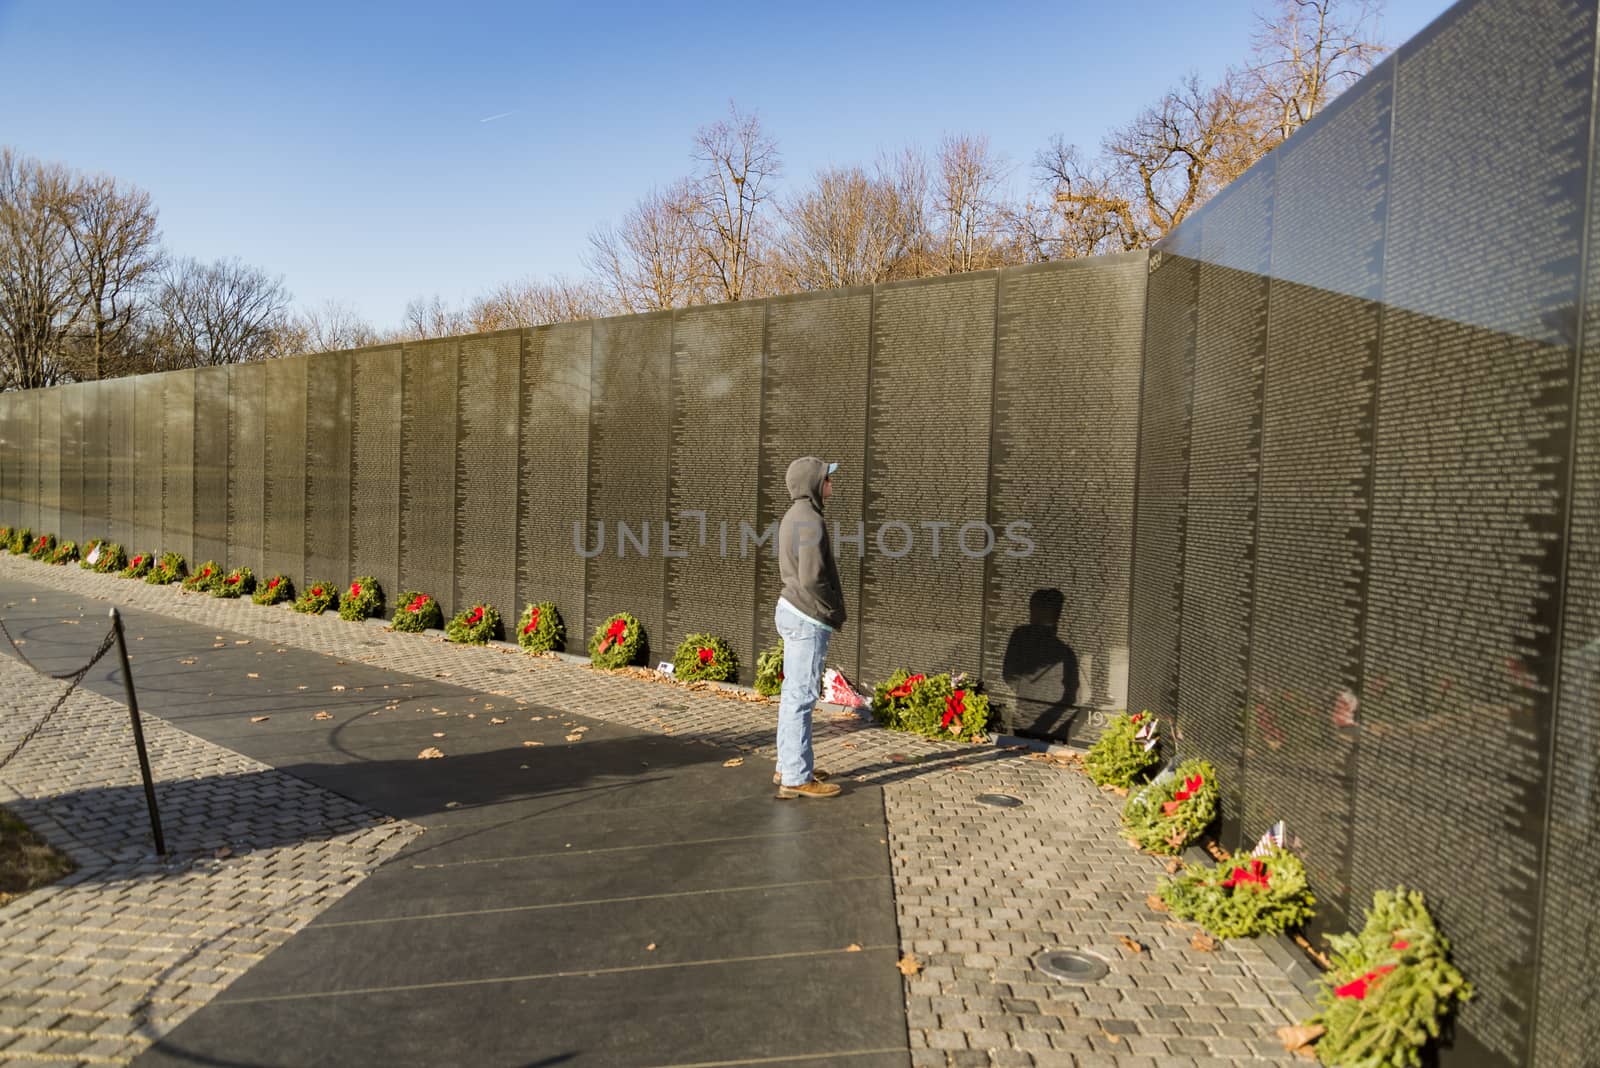 WASHINGTON DC -December 17, 2017: Names on Vietnam War Veterans Memorial on December 17, 2017 in Washington DC, USA. The memorial receives around 3 million visitors each year.